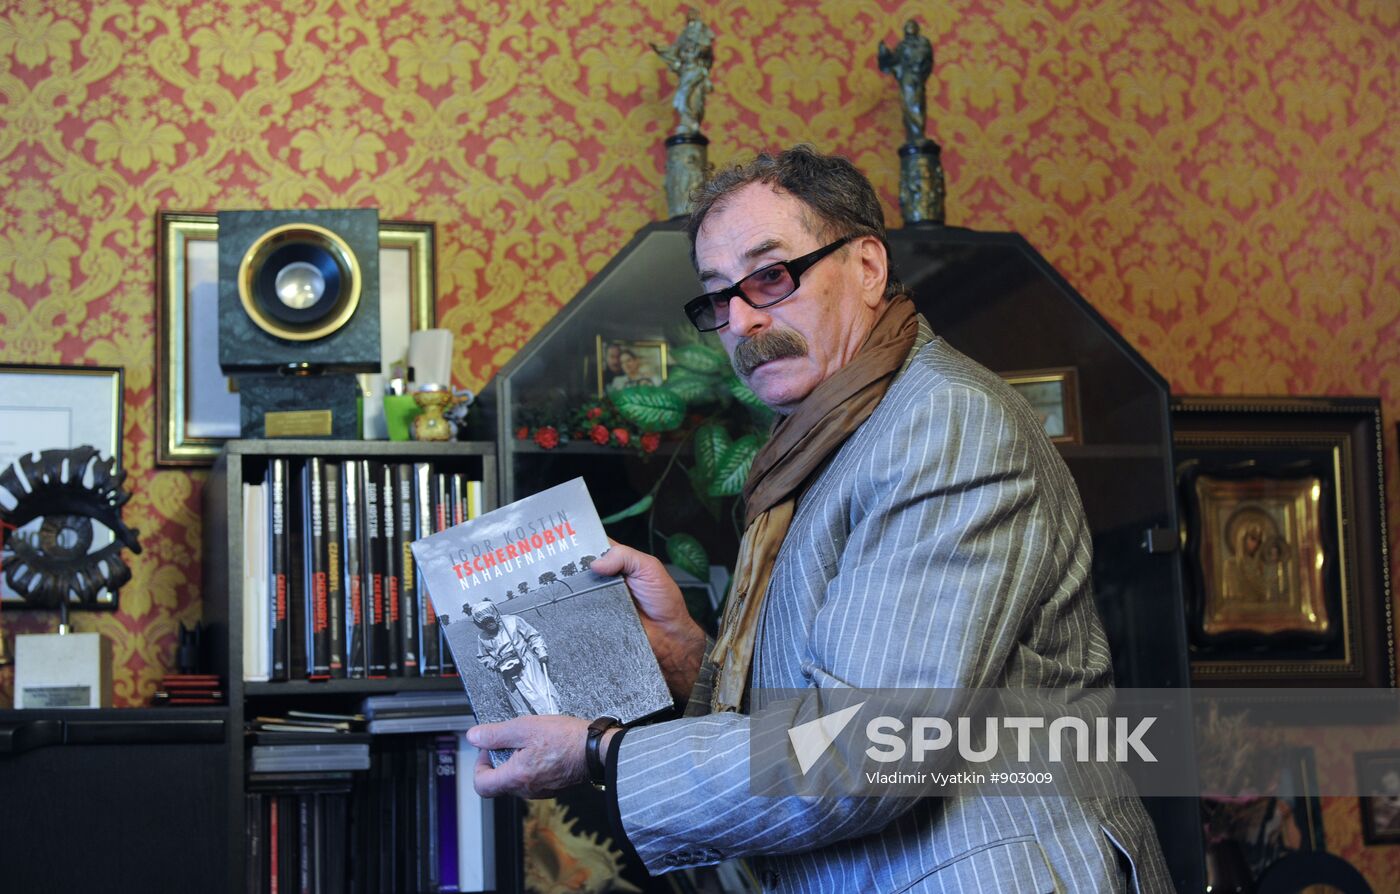 RIA Novosti former photojournalist Igor Kostin gives interview